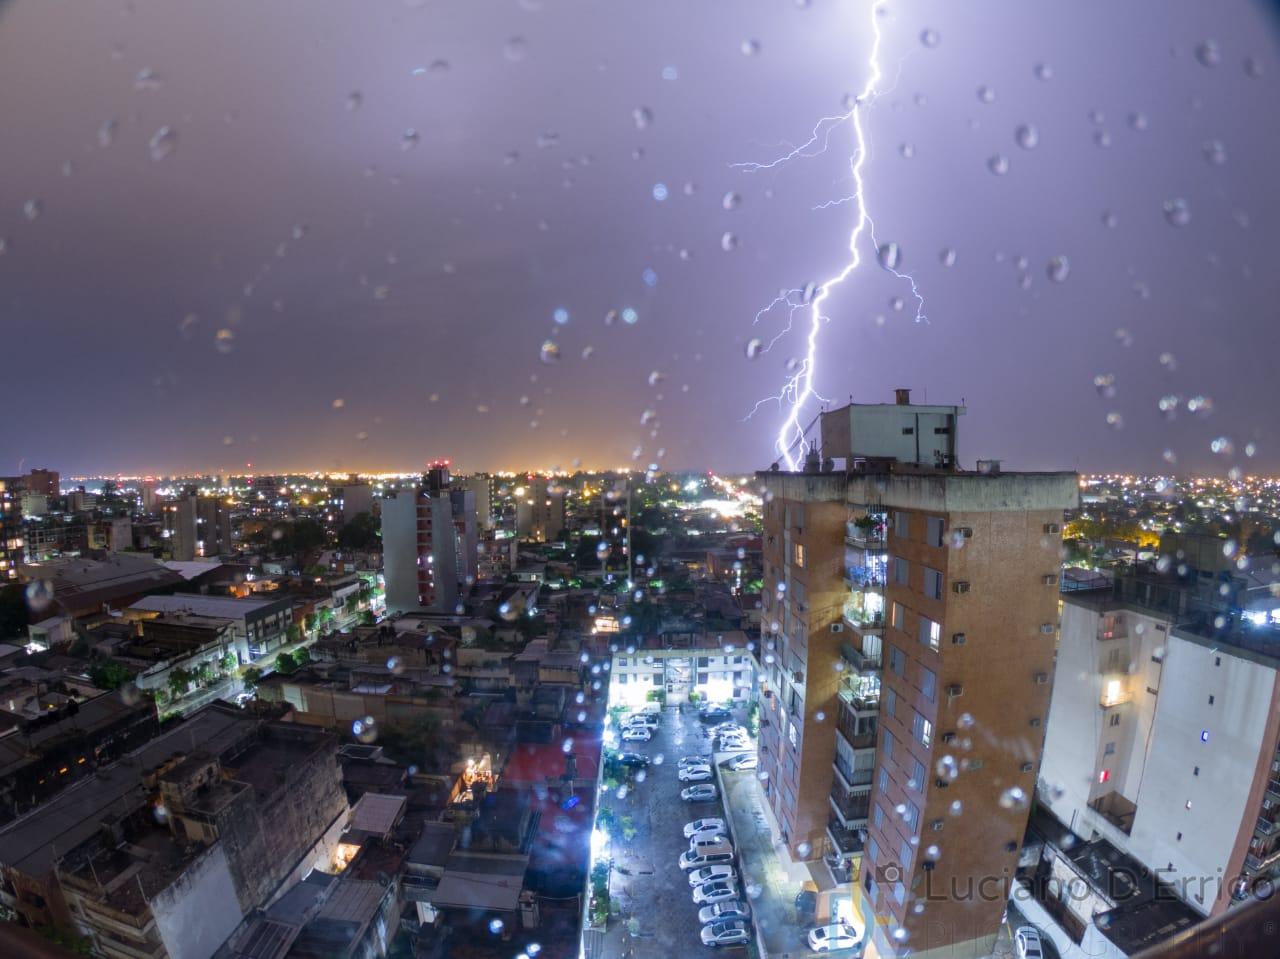 BARRIO SUR. El fotógrafo Luciano D' Errico captó el momento de la tormenta eléctrica. IMAGEN GENTILEZA @DERRICOLUC